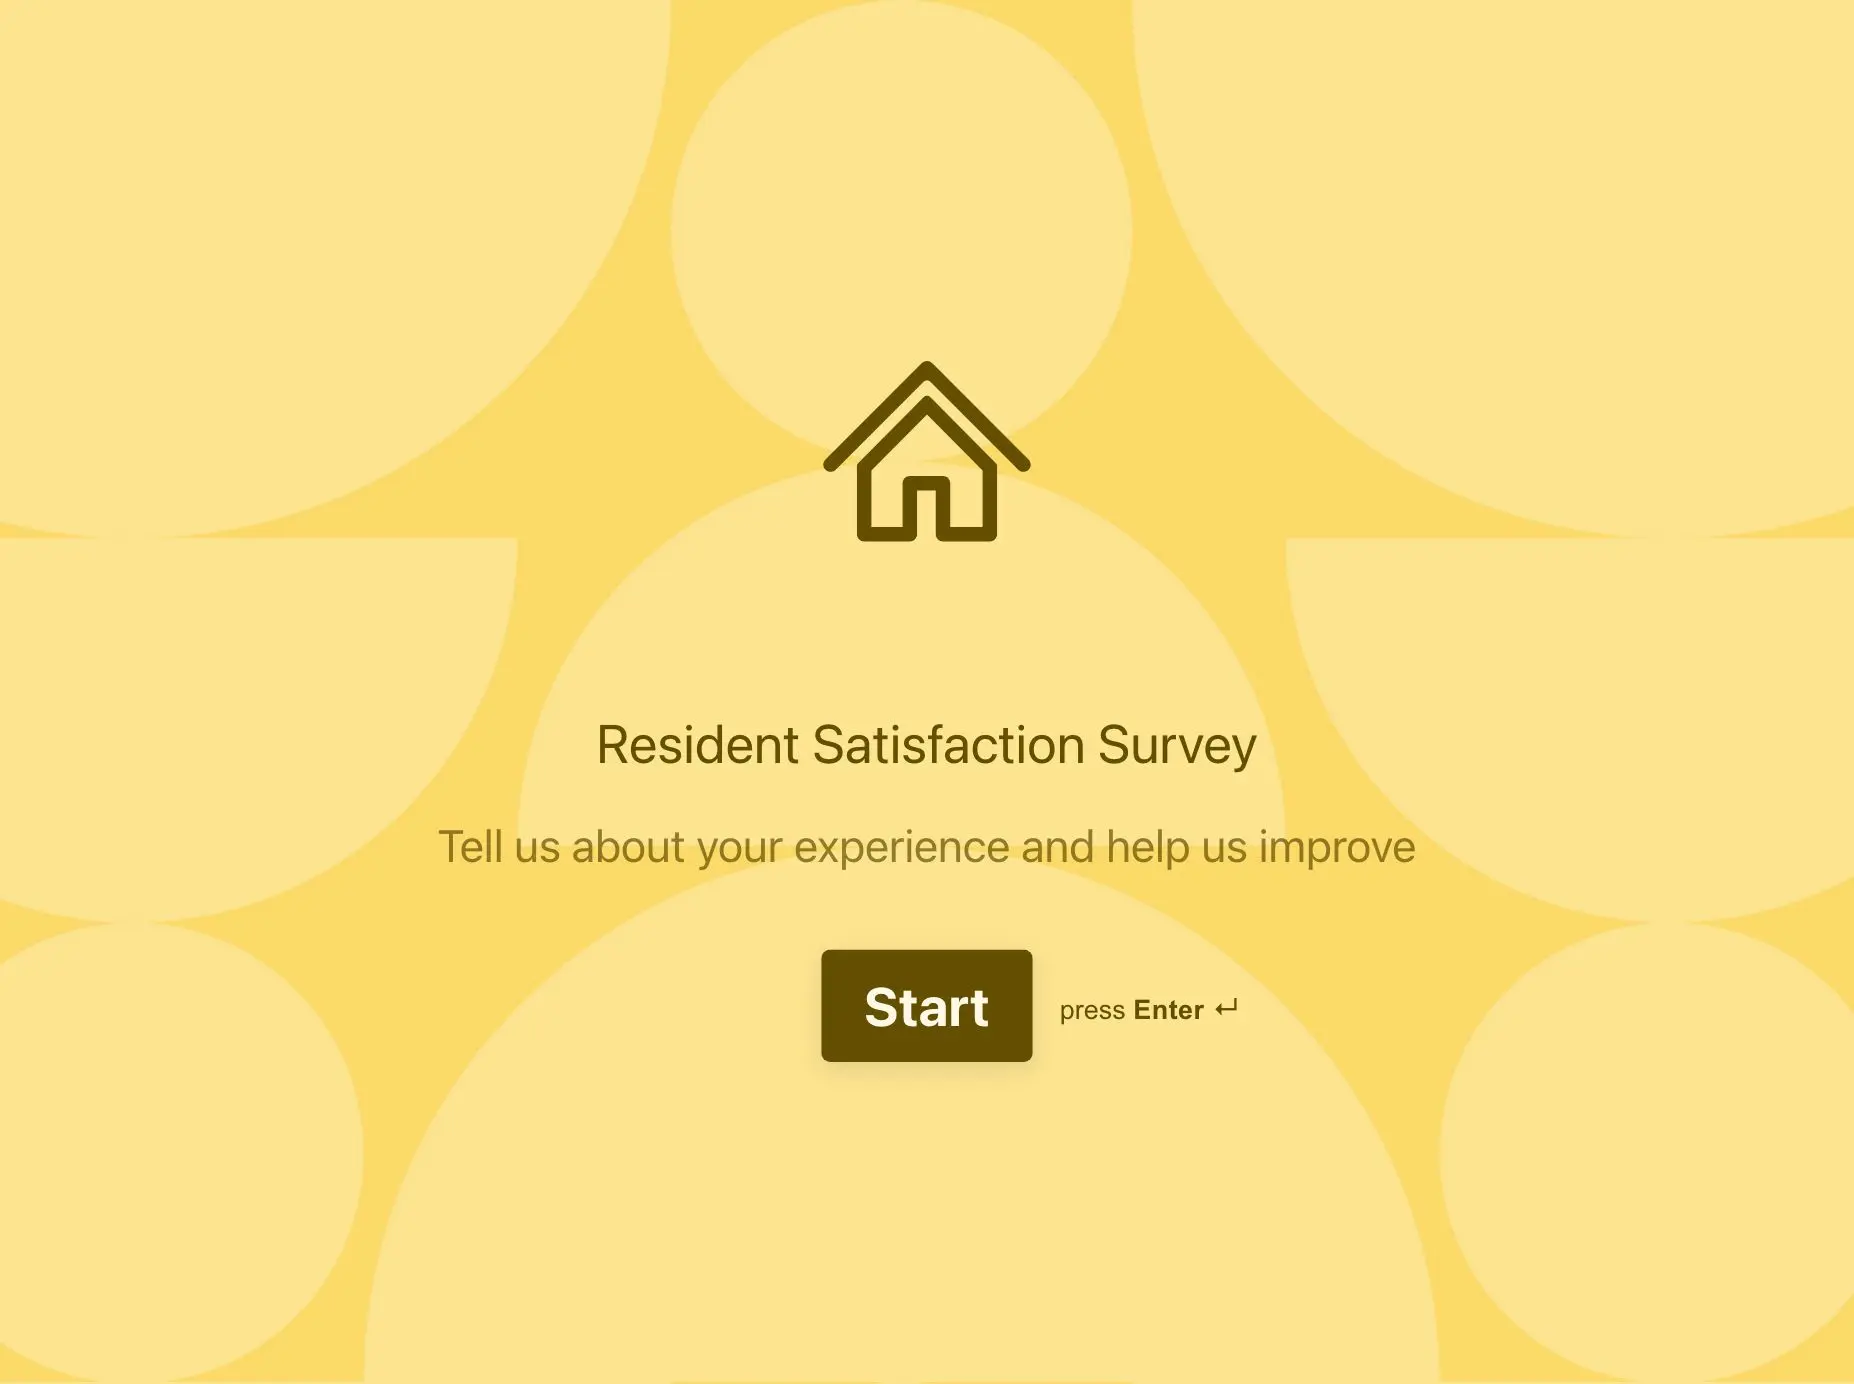 Resident Satisfaction Survey Template Hero